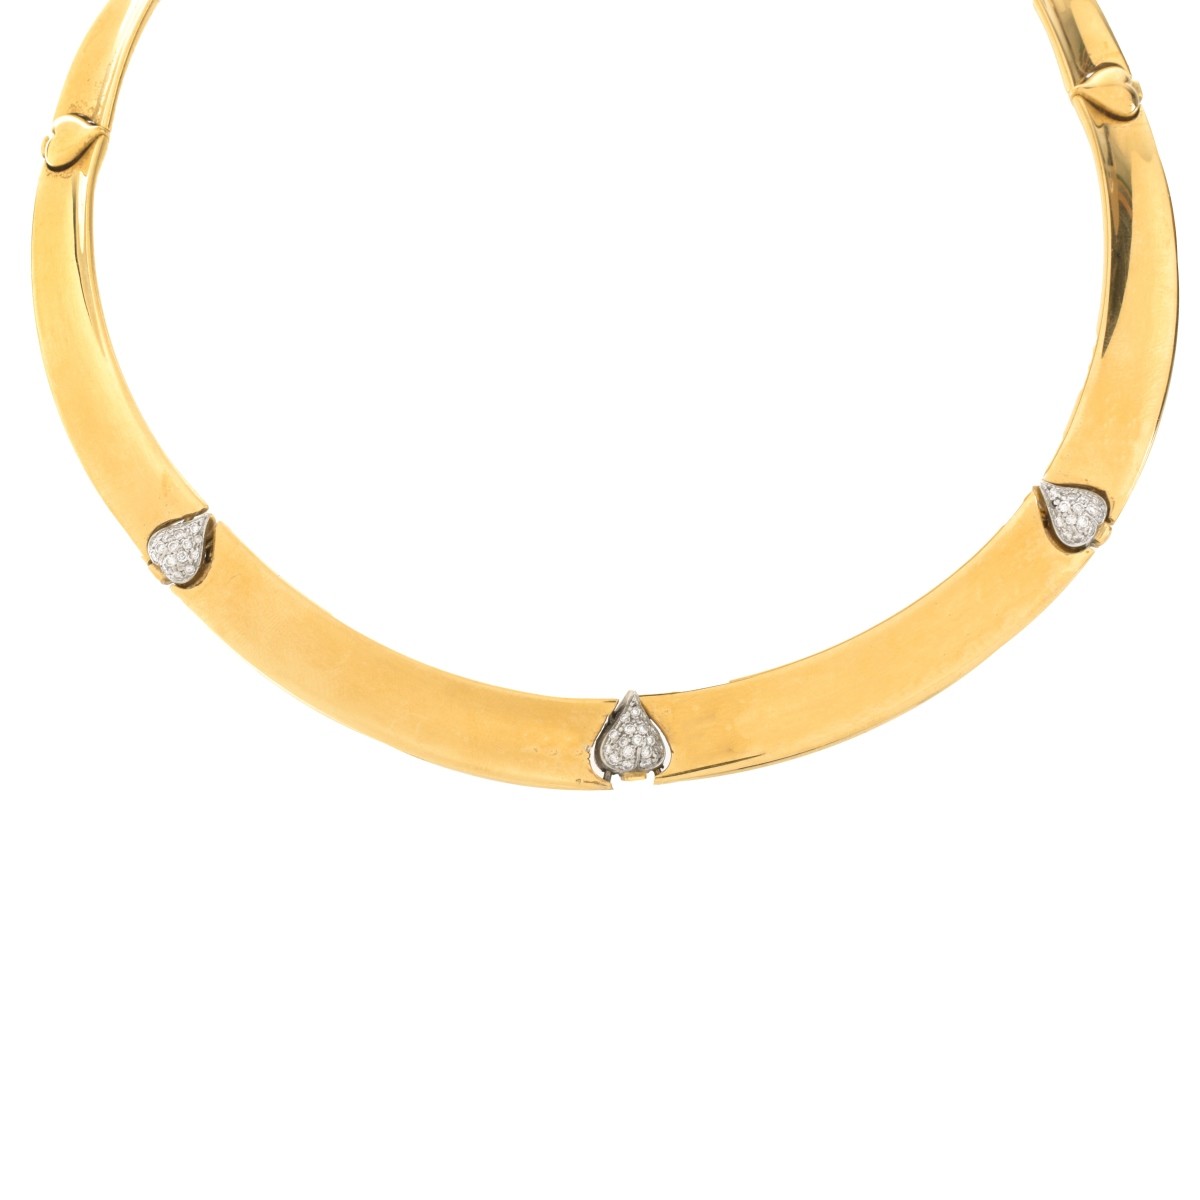 Movado 18K and Diamond Necklace